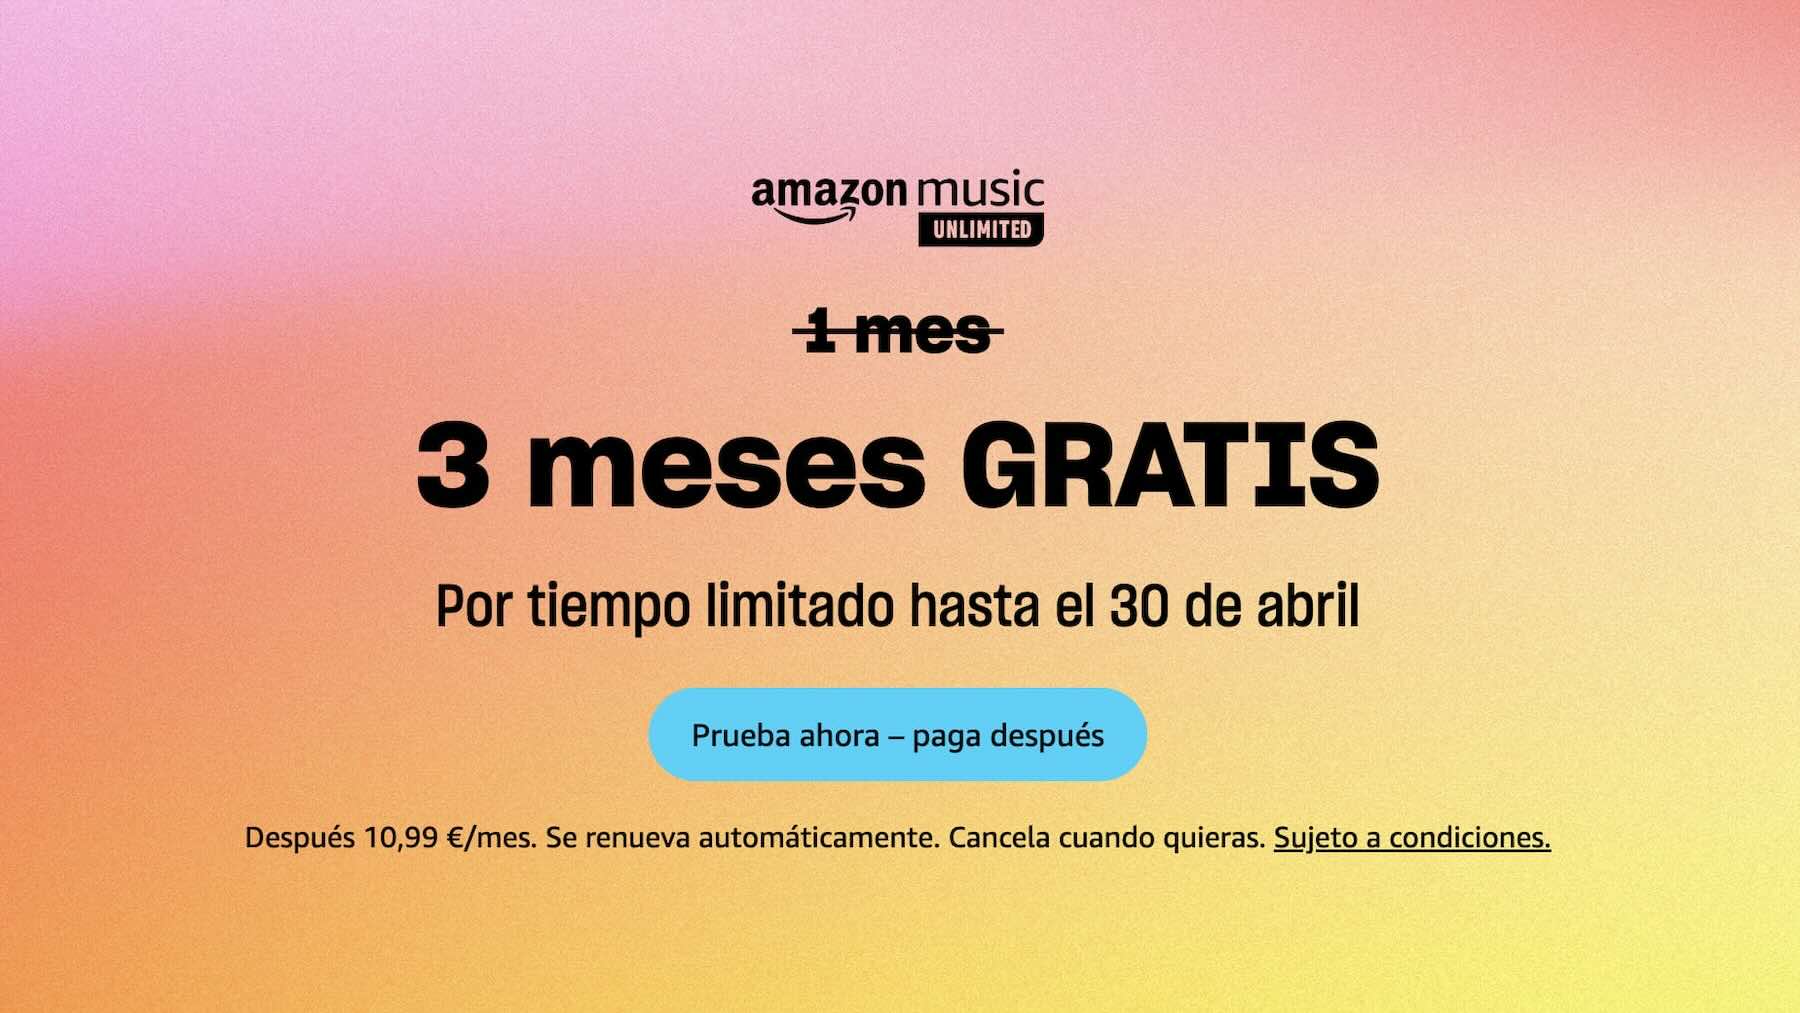 Amazon Music Unlimited te regala 3 meses gratis, descubre cómo